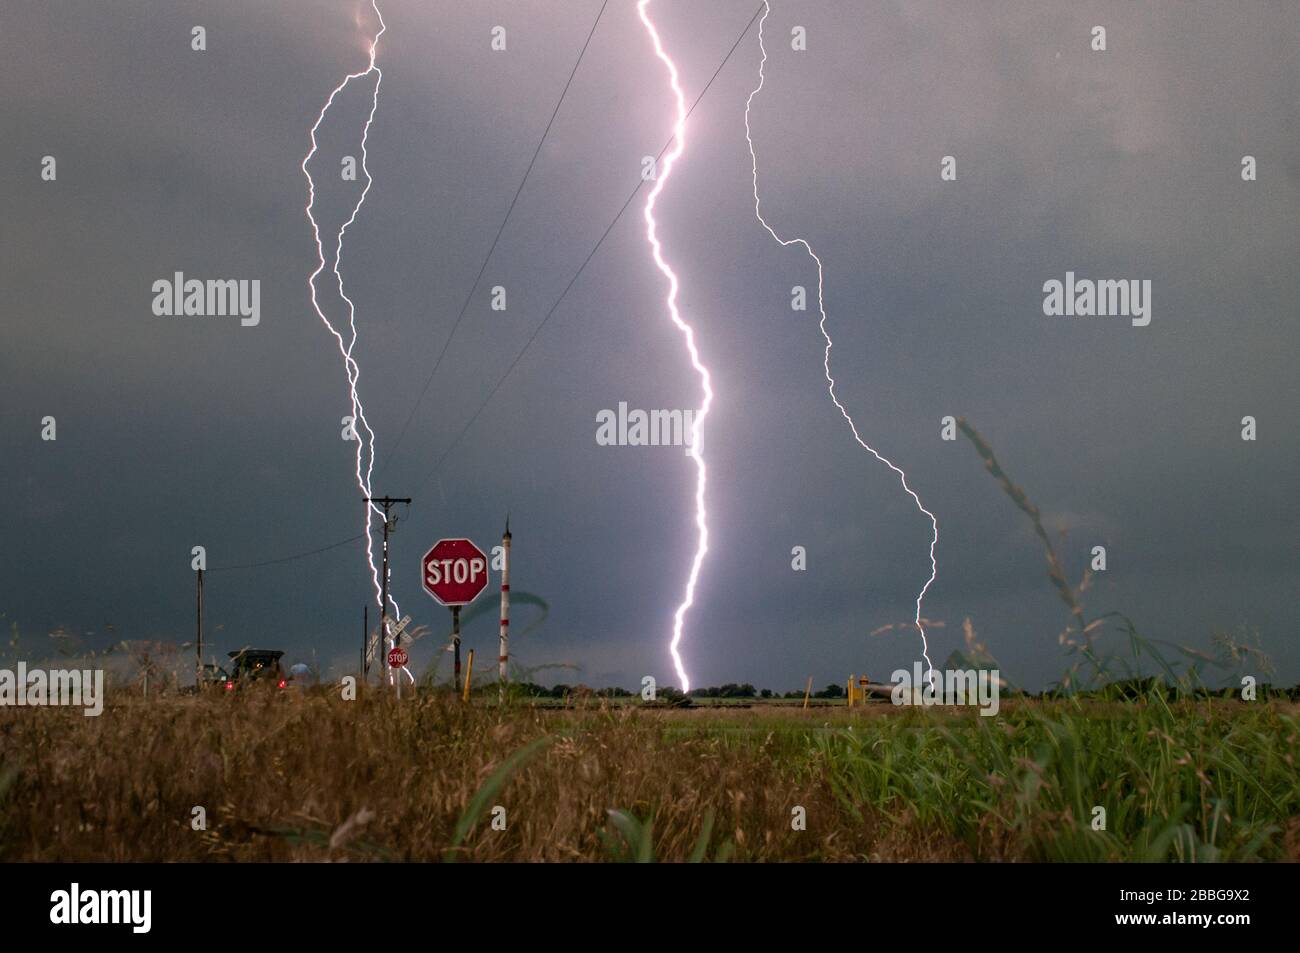 Tormenta con relámpagos sobre un campo rural en Oklahoma Estados Unidos 4 imagen fusionada incliudando un rayo golpeando un poste de poder. Foto de stock